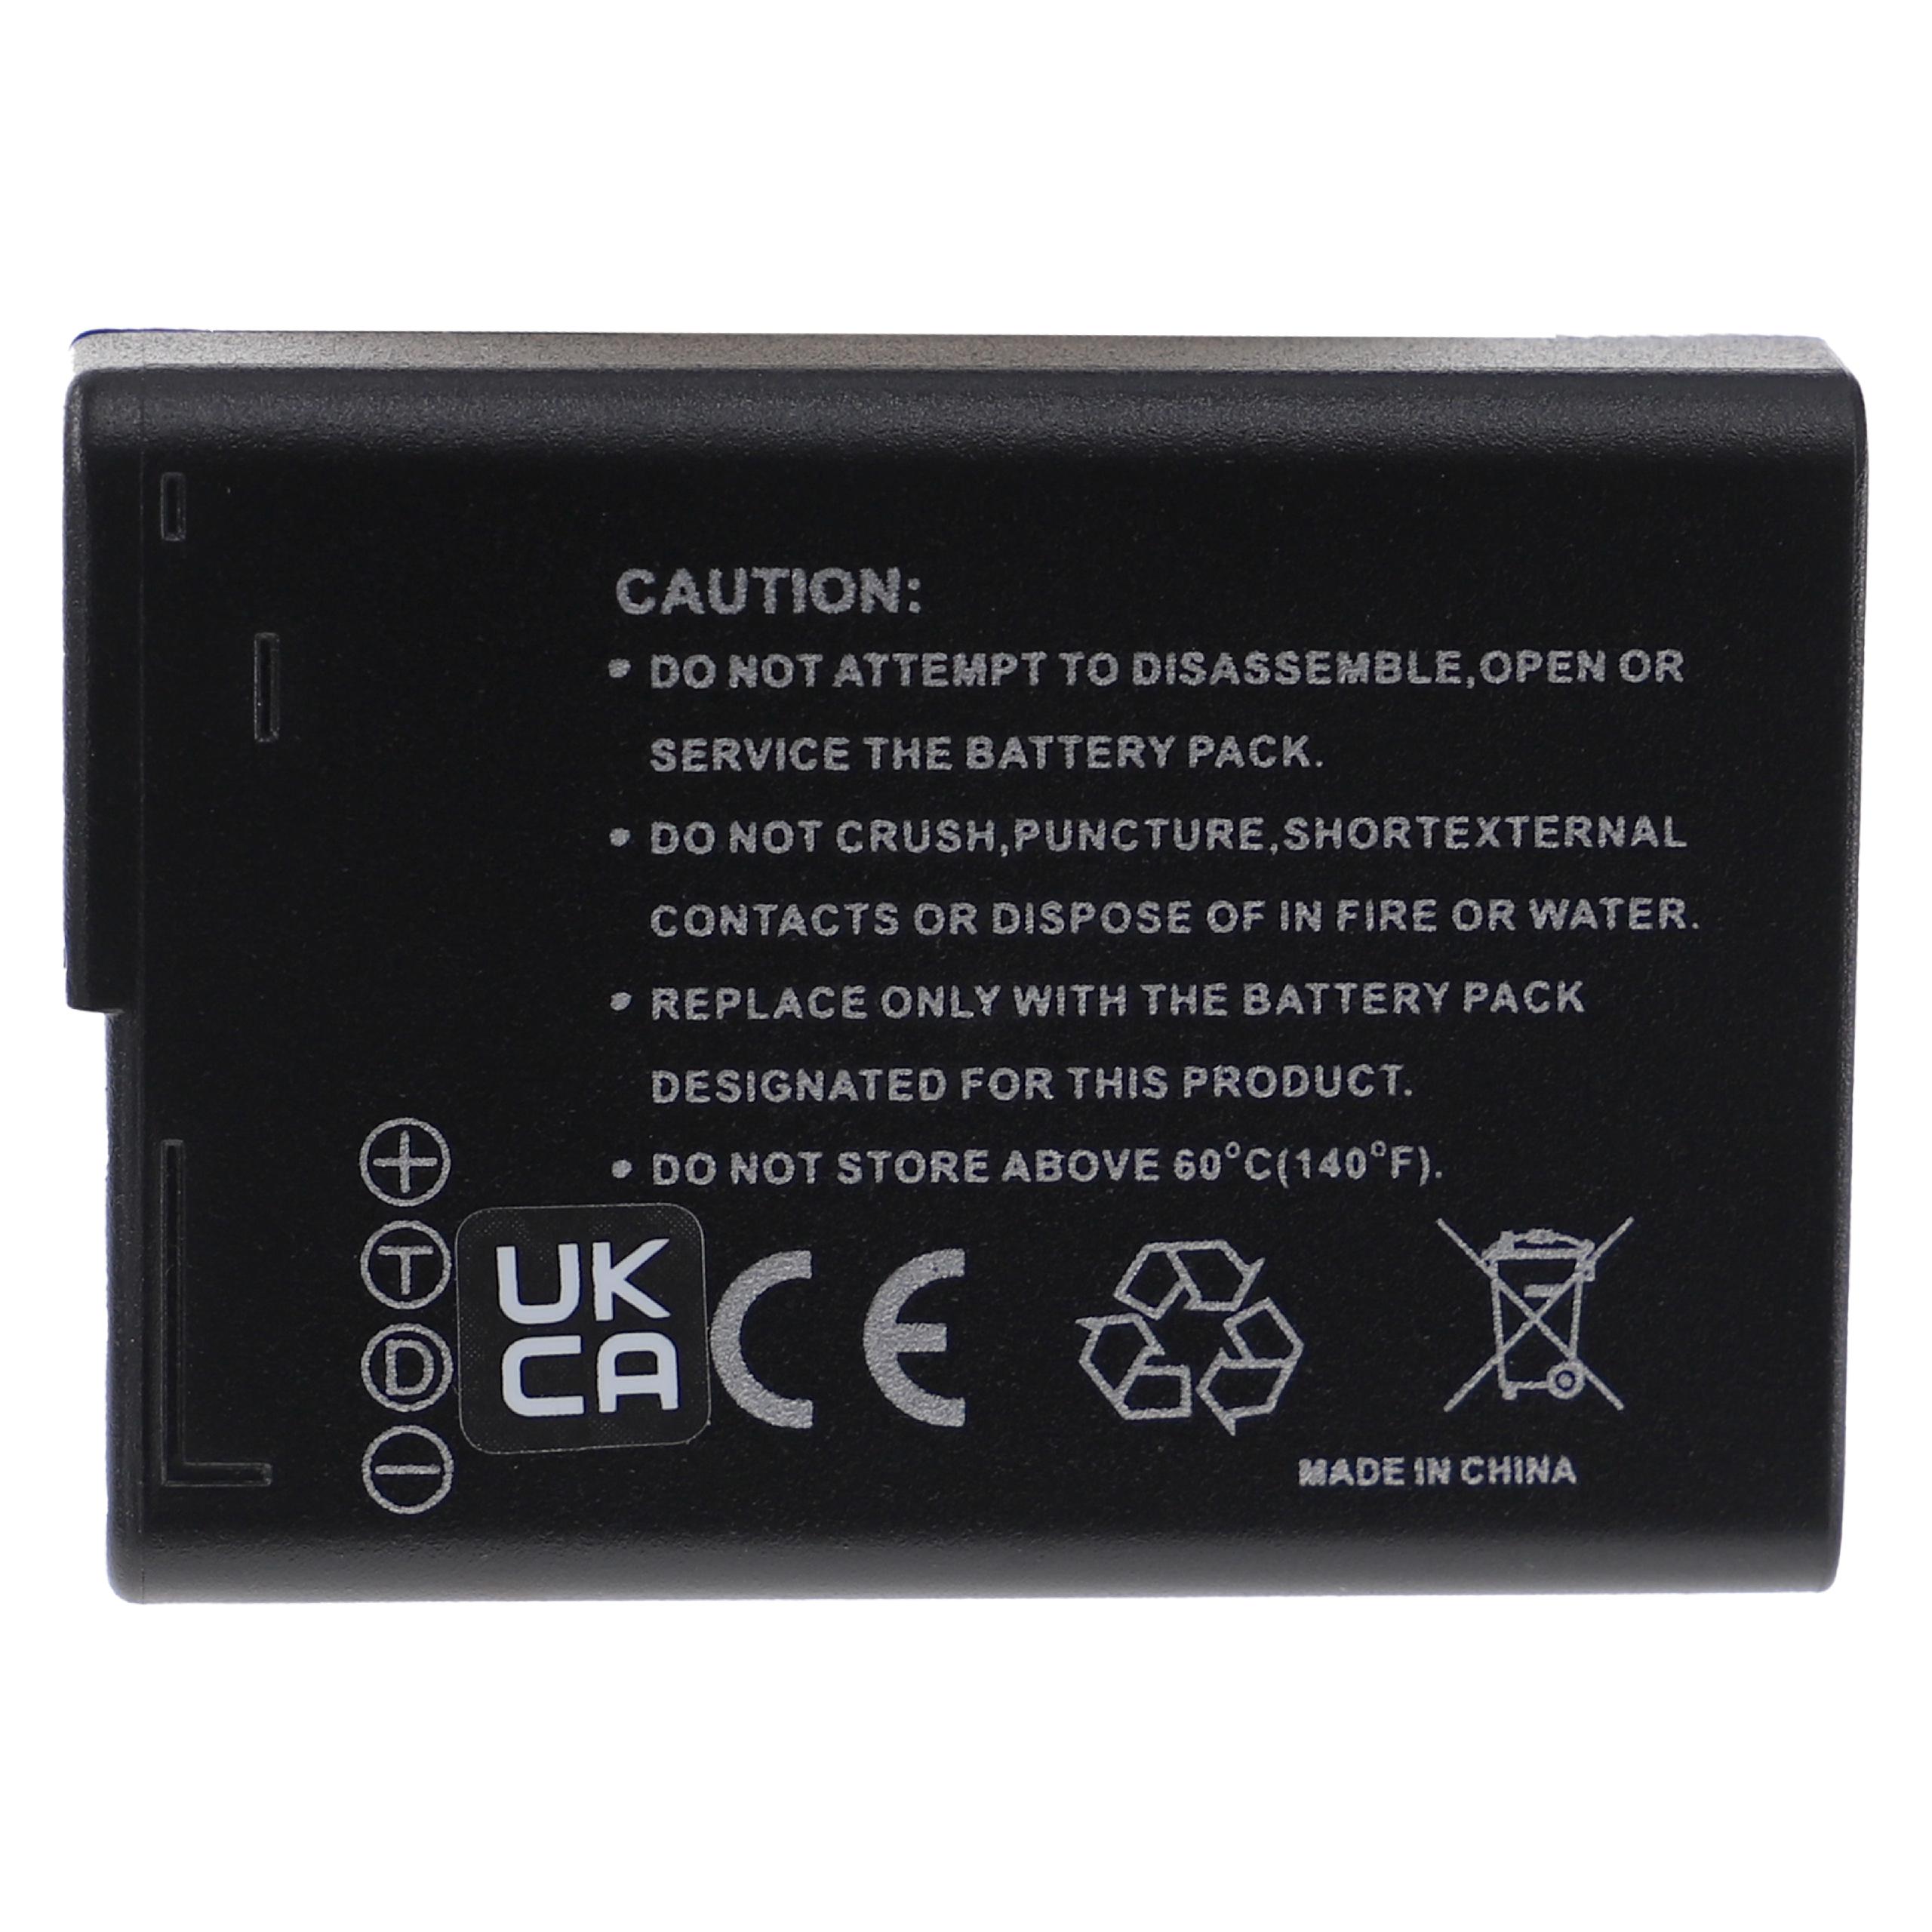 Akumulator do aparatu cyfrowego zamiennik Panasonic DMW-BLD10E, DMW-BLD10, DMW-BLD10PP - 950 mAh 7,4 V Li-Ion